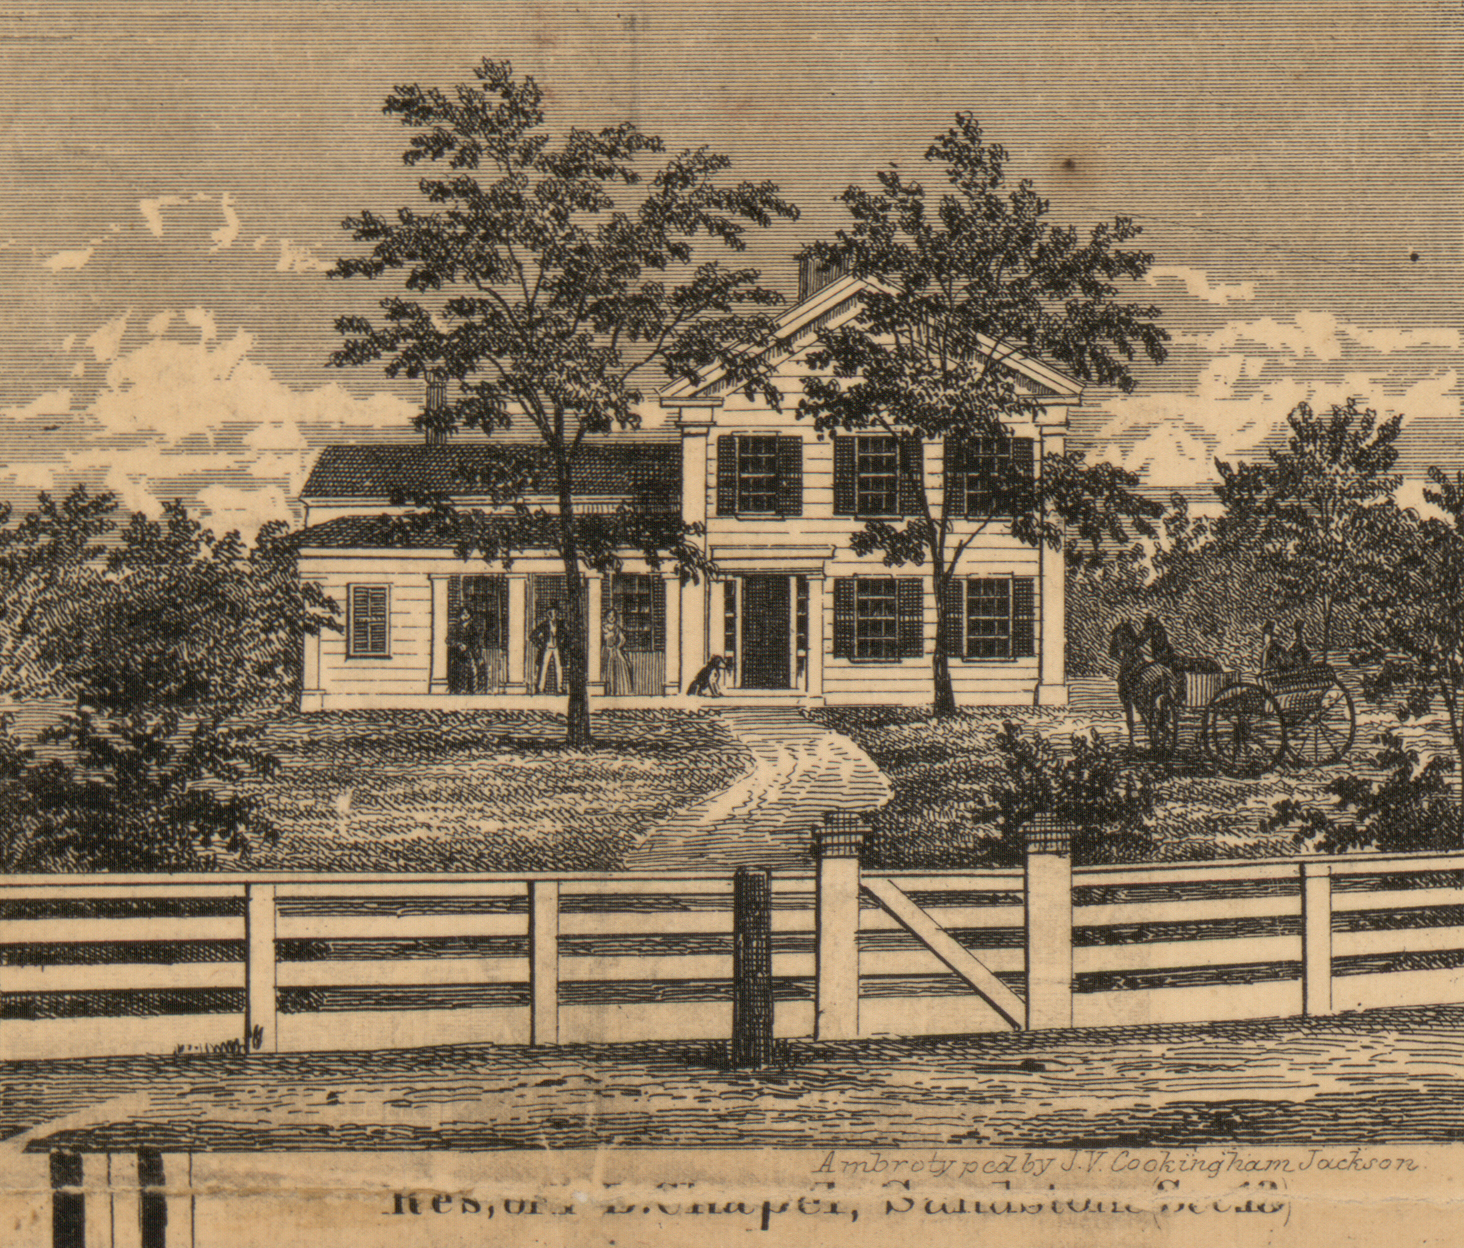 Residence, L.D. Chapel, Section 18, Sandstone, Jackson 1858